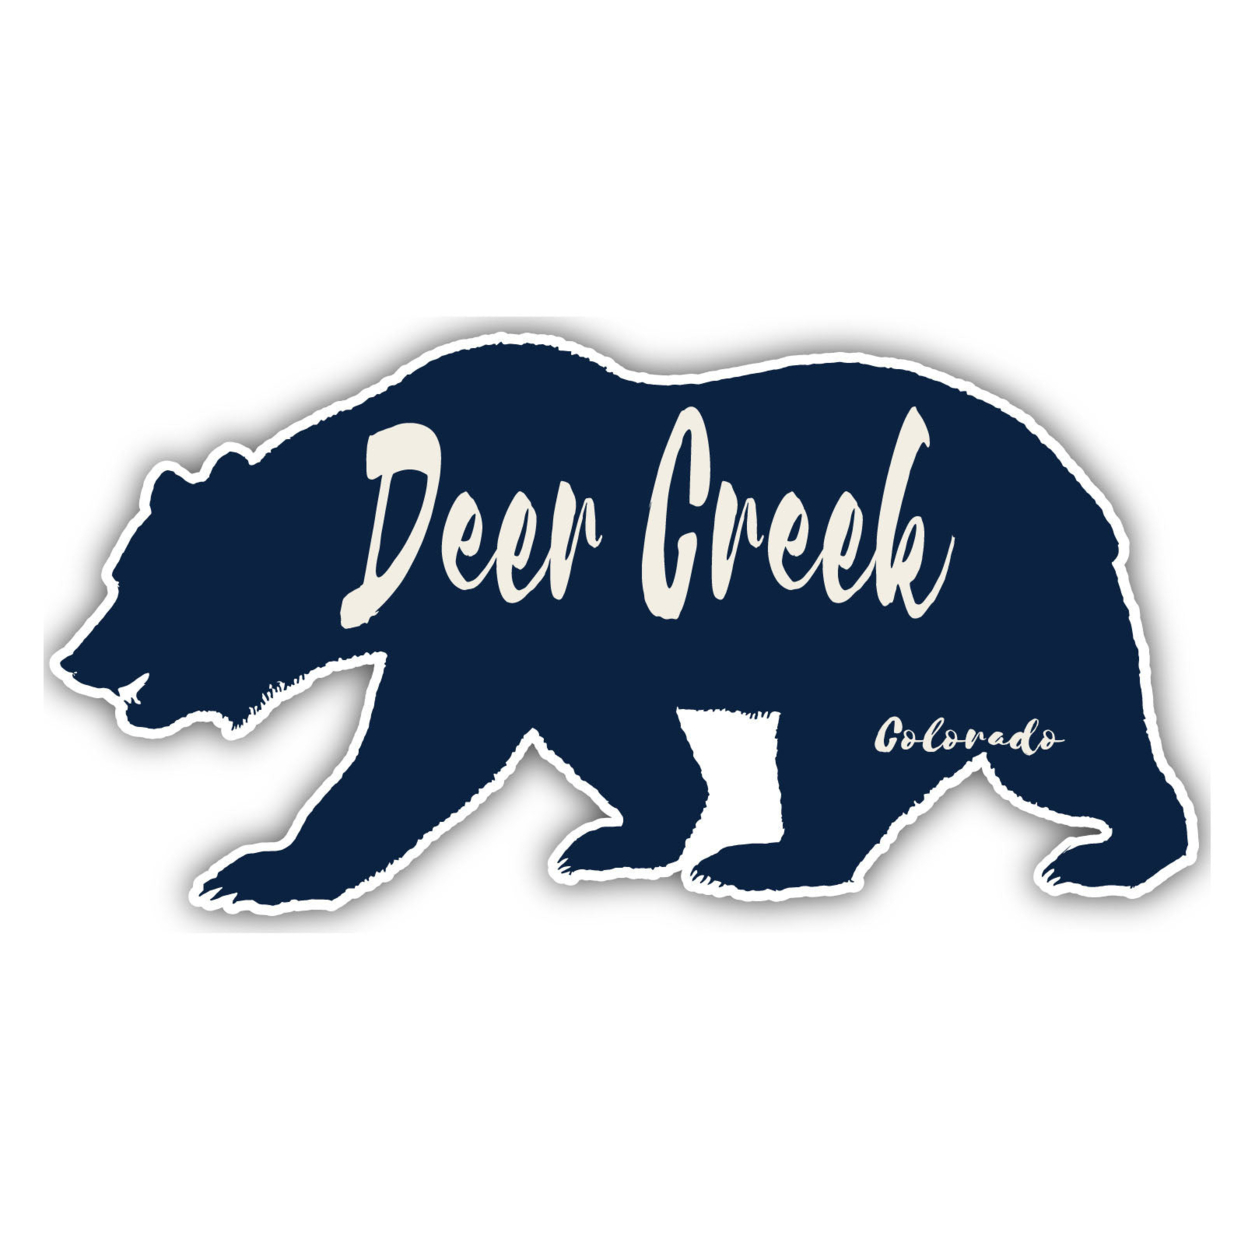 Deer Creek Colorado Souvenir Decorative Stickers (Choose Theme And Size) - Single Unit, 6-Inch, Bear